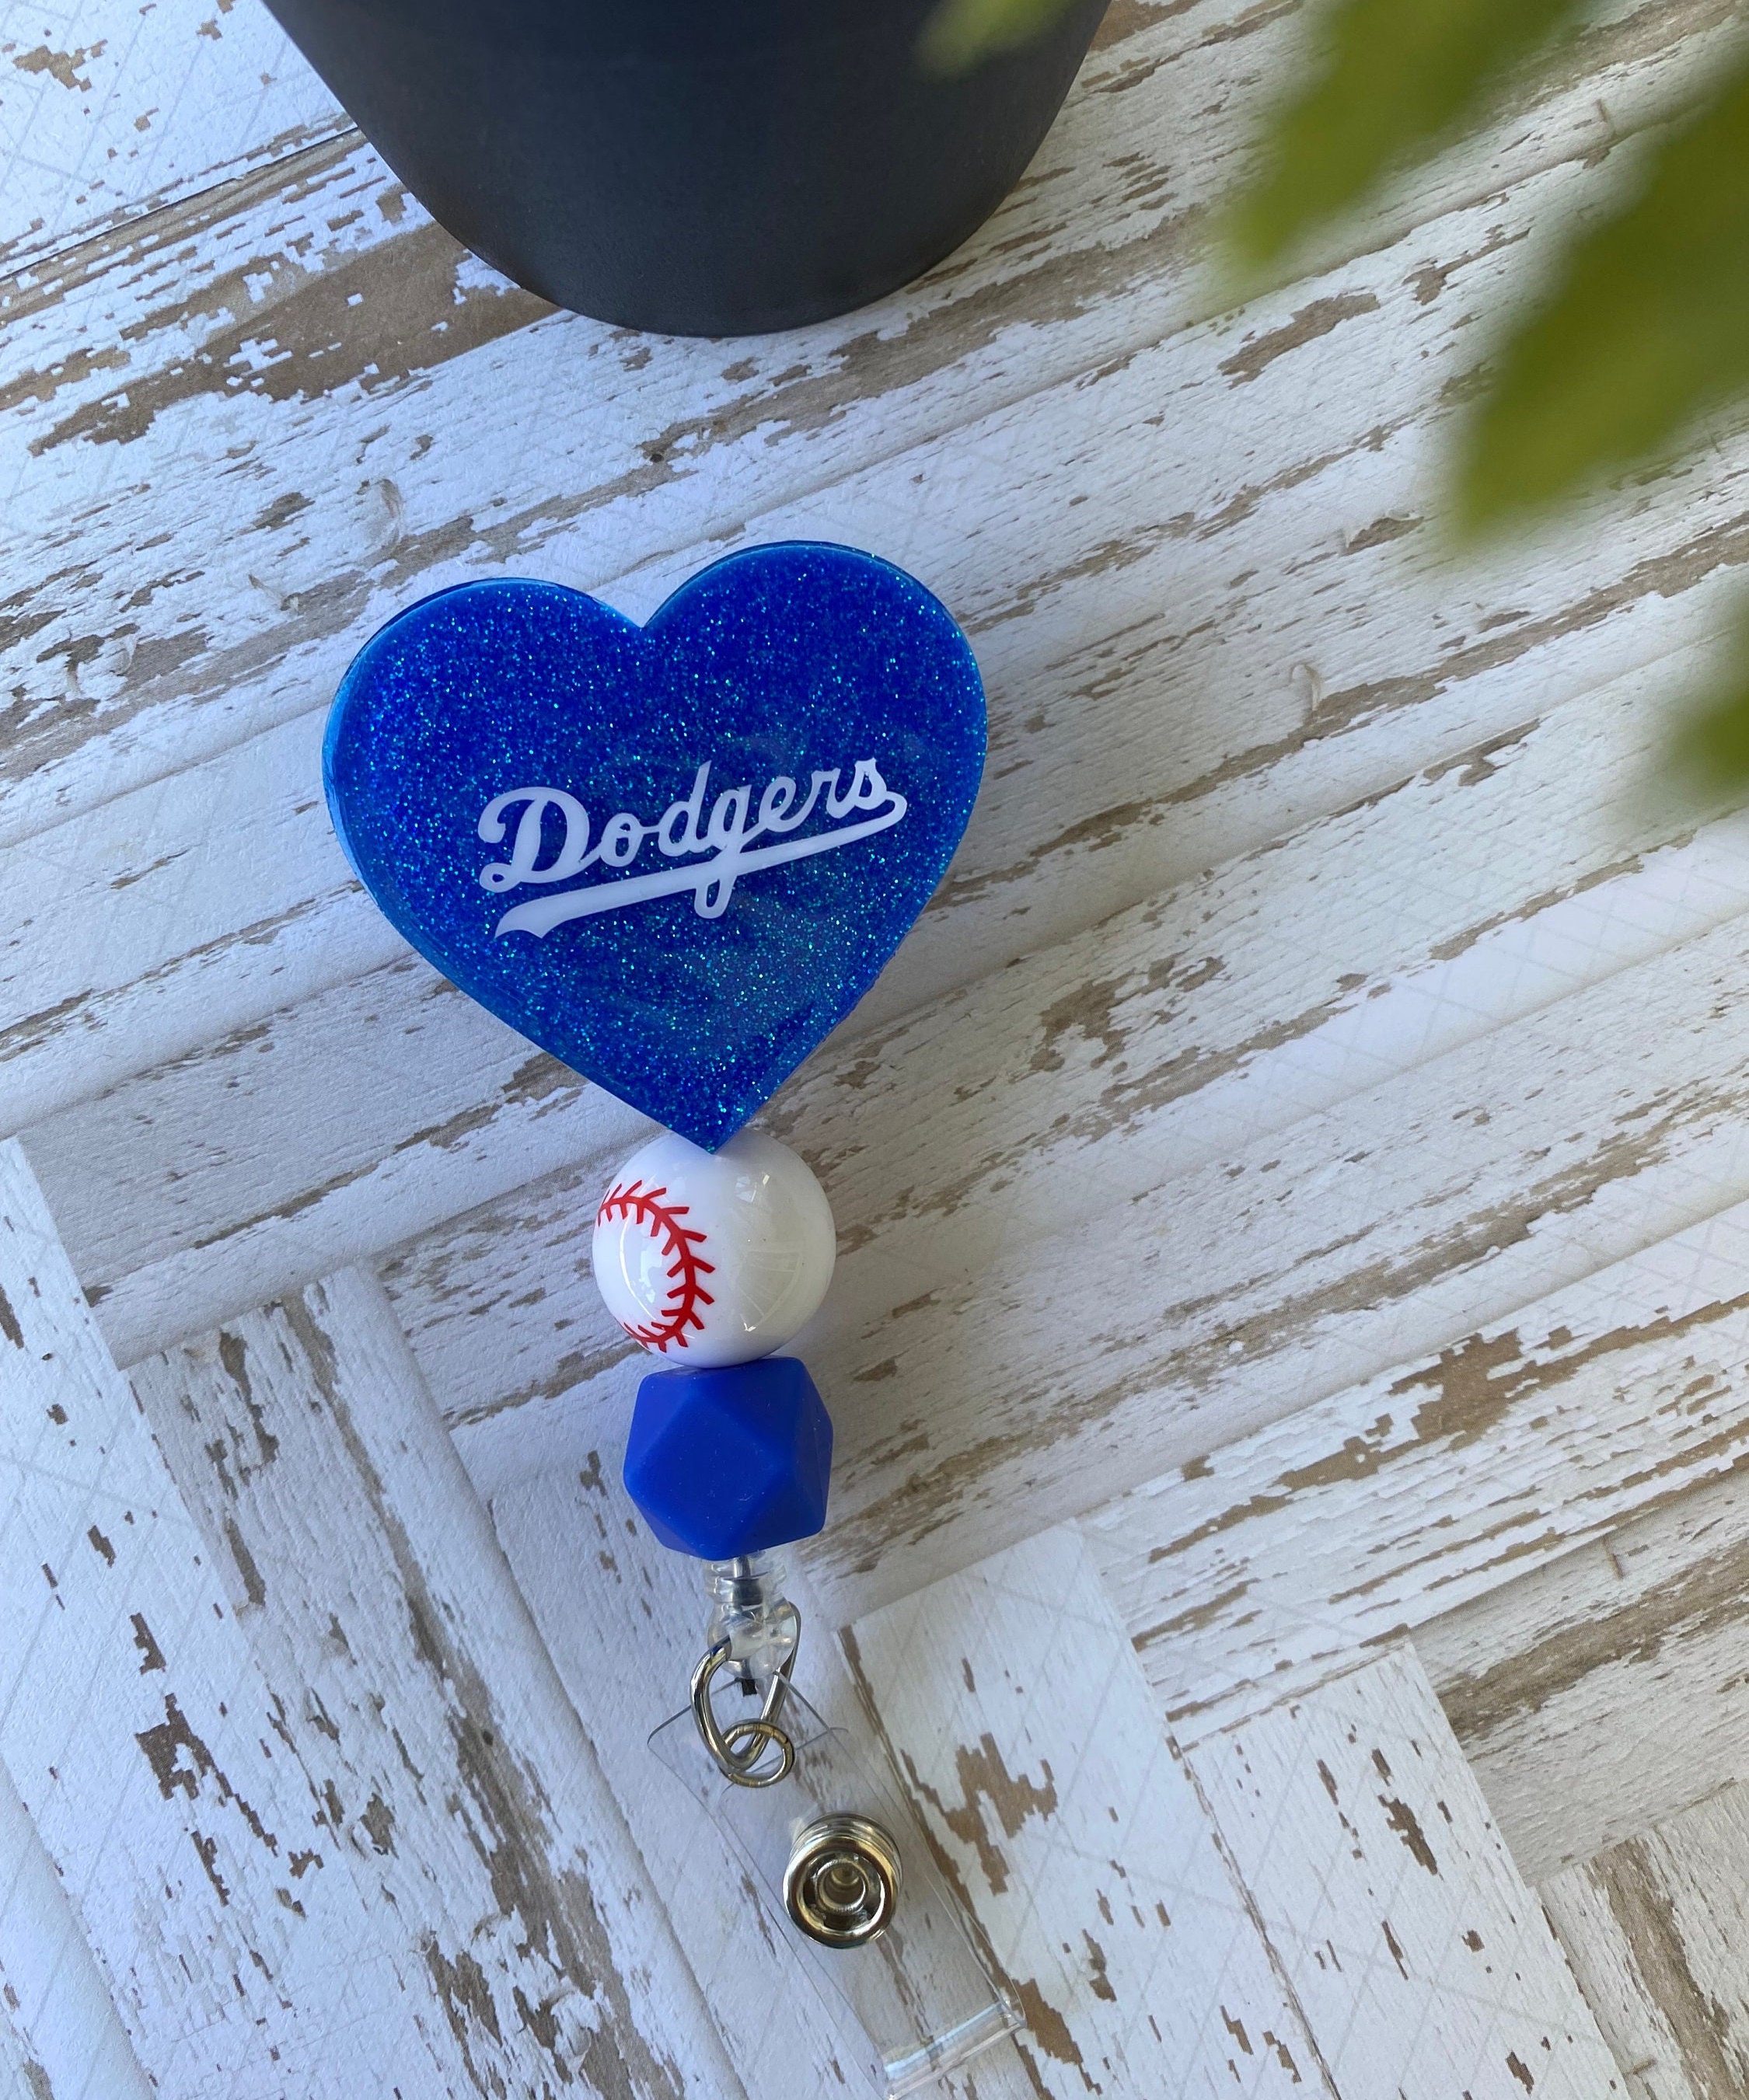 Dodgers Heart 